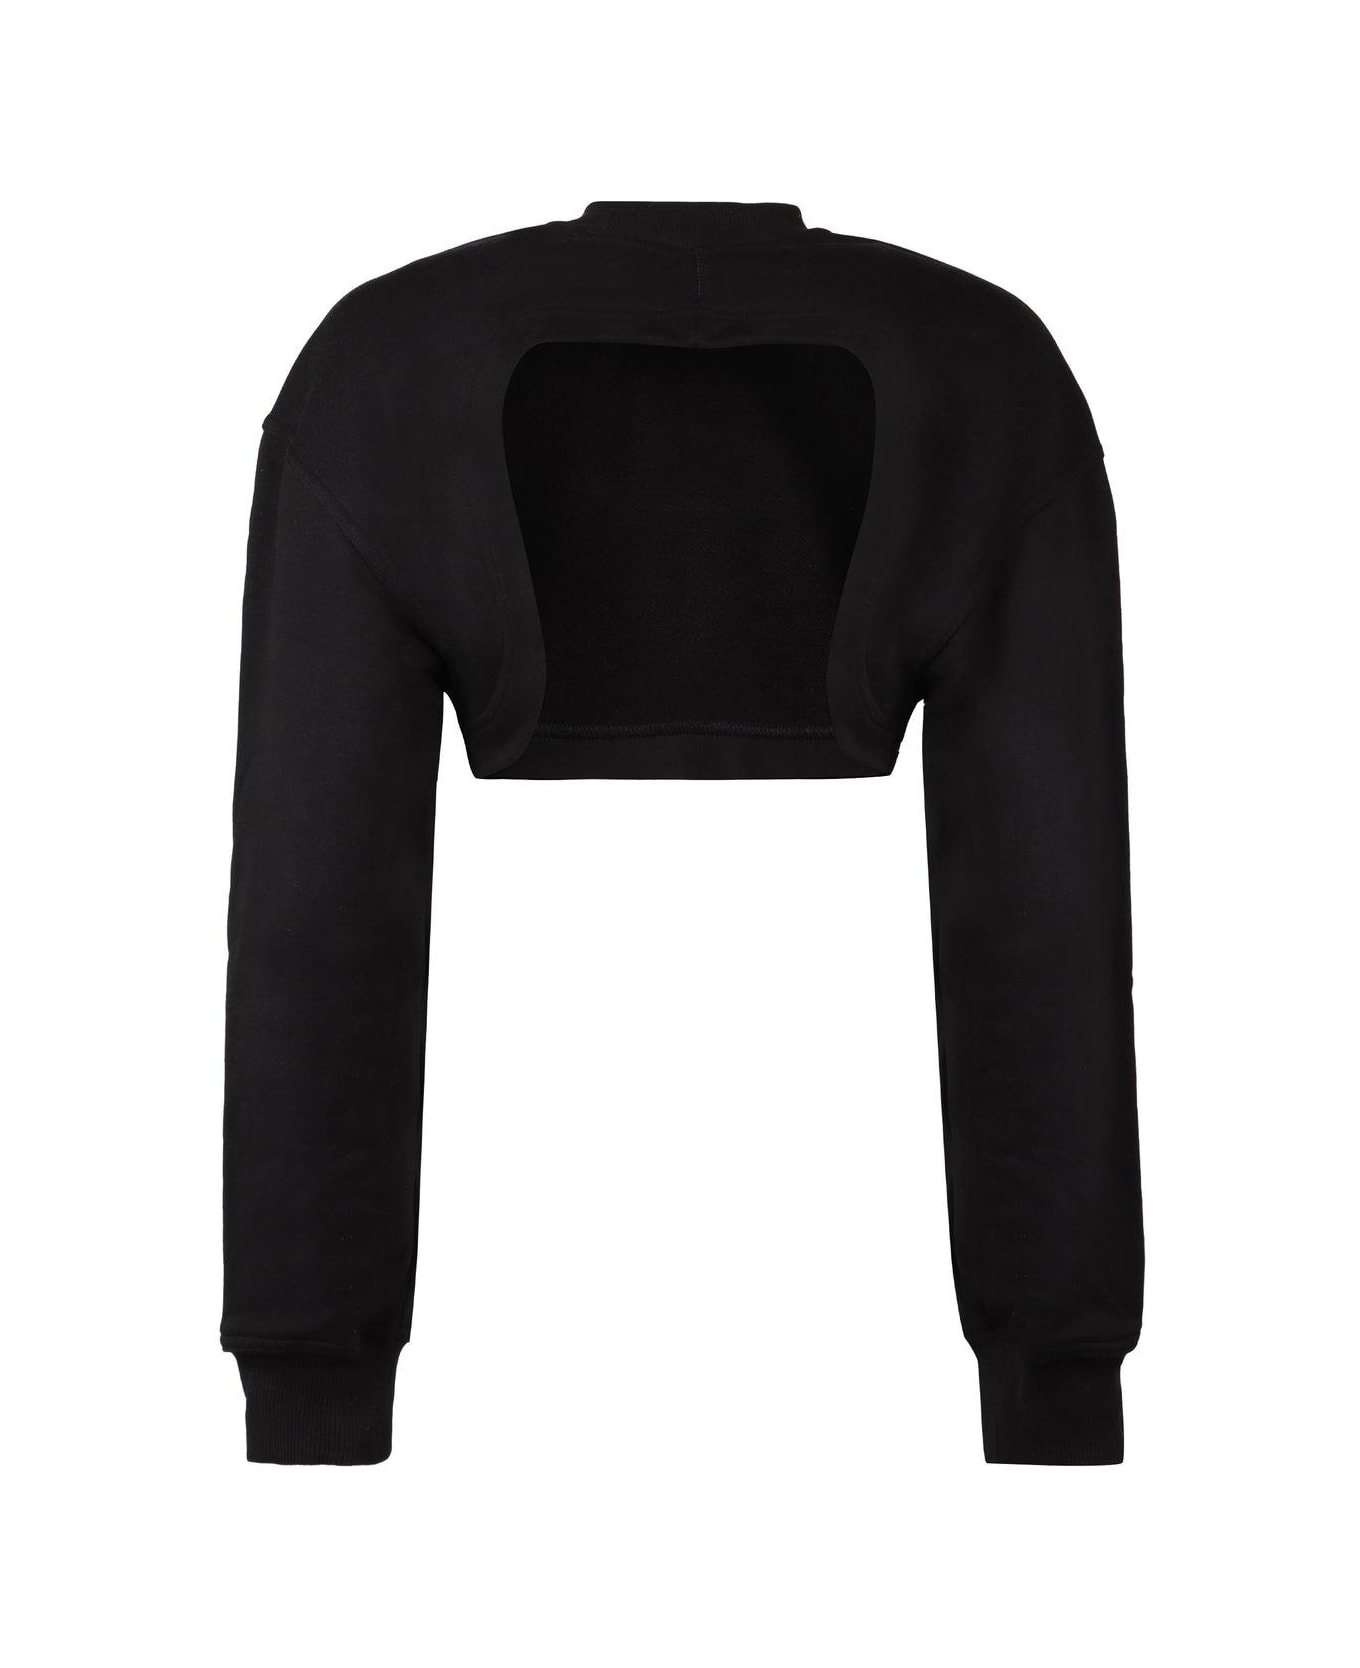 Adidas by Stella McCartney Crewneck Cropped Sweatshirt - Black スウェットパンツ